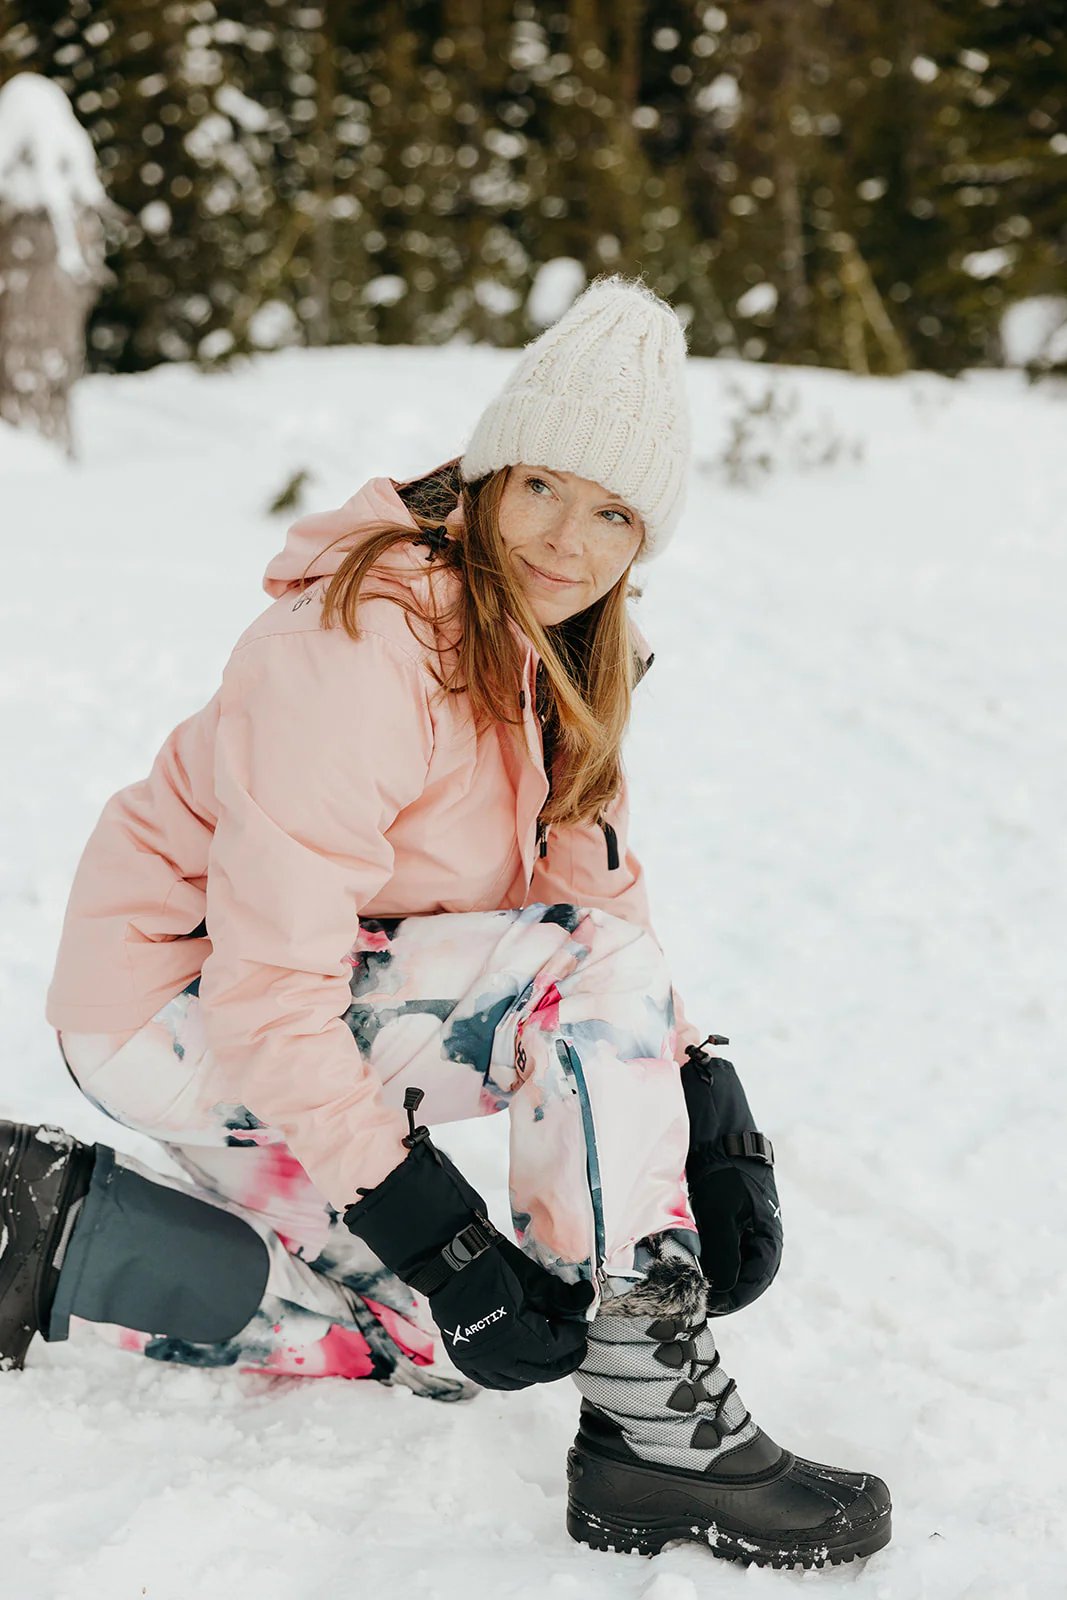 WOMEN'S ADULT SIZE 3X (24W-26W) ARCTIX 5K WINTER SKI AND SNOWBOARD PANTS